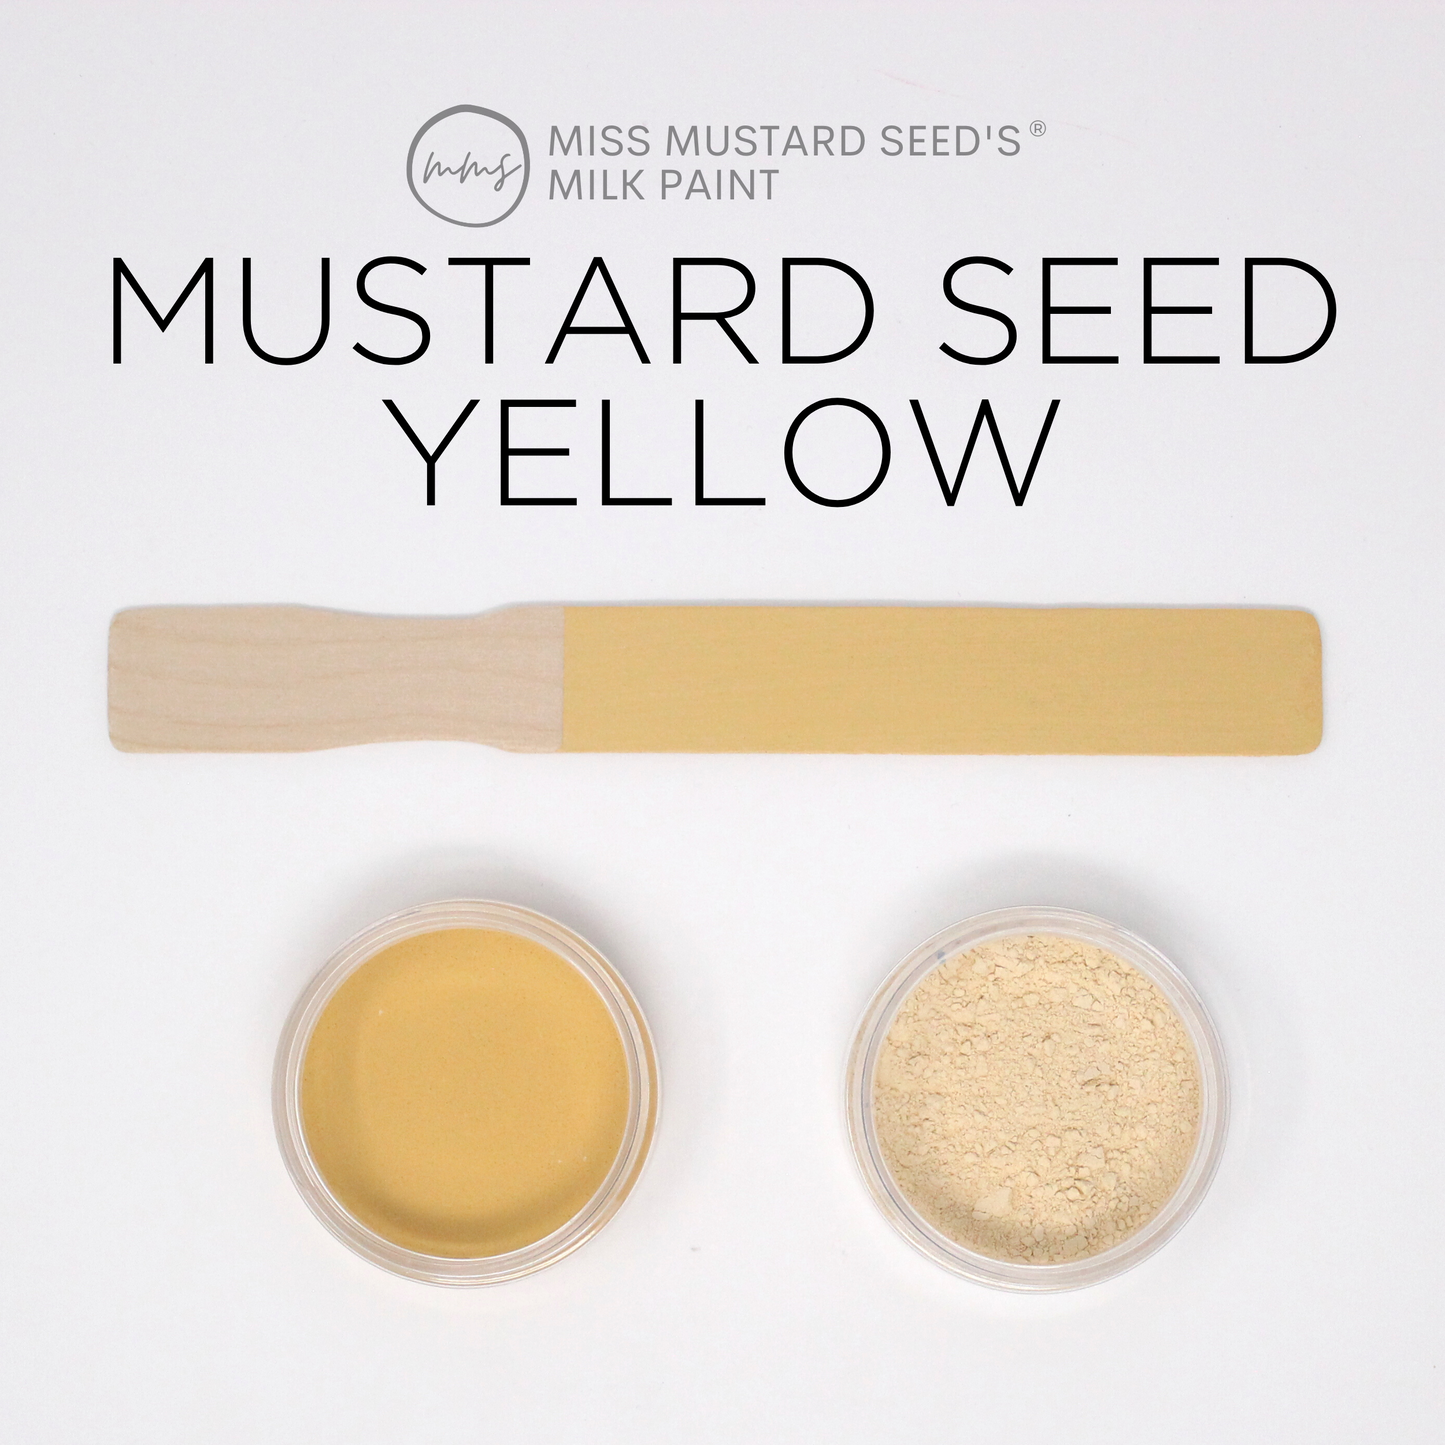 MilkPaint™ - Mustard Seed Yellow